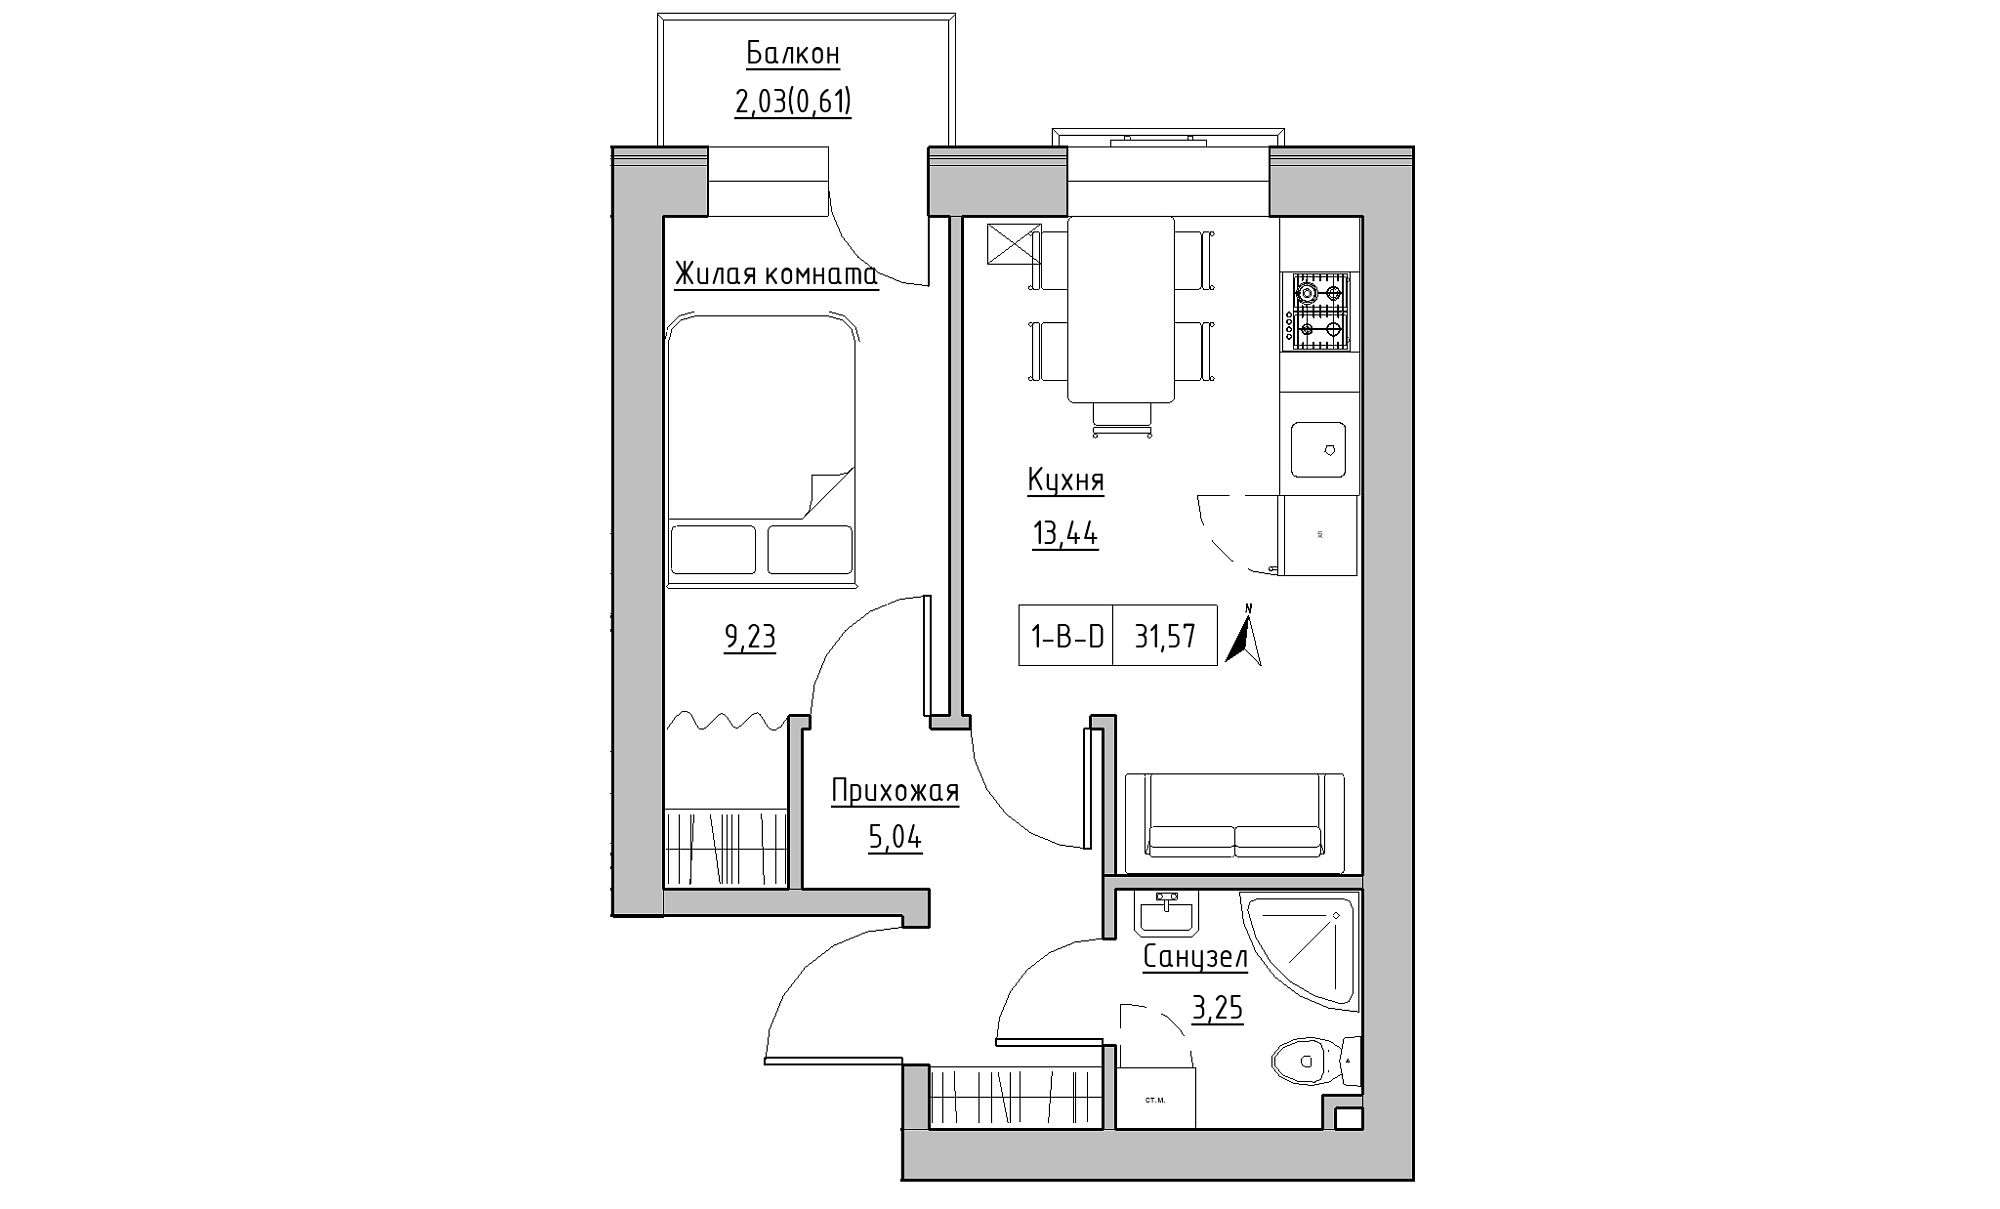 Planning 1-rm flats area 31.57m2, KS-016-04/0003.